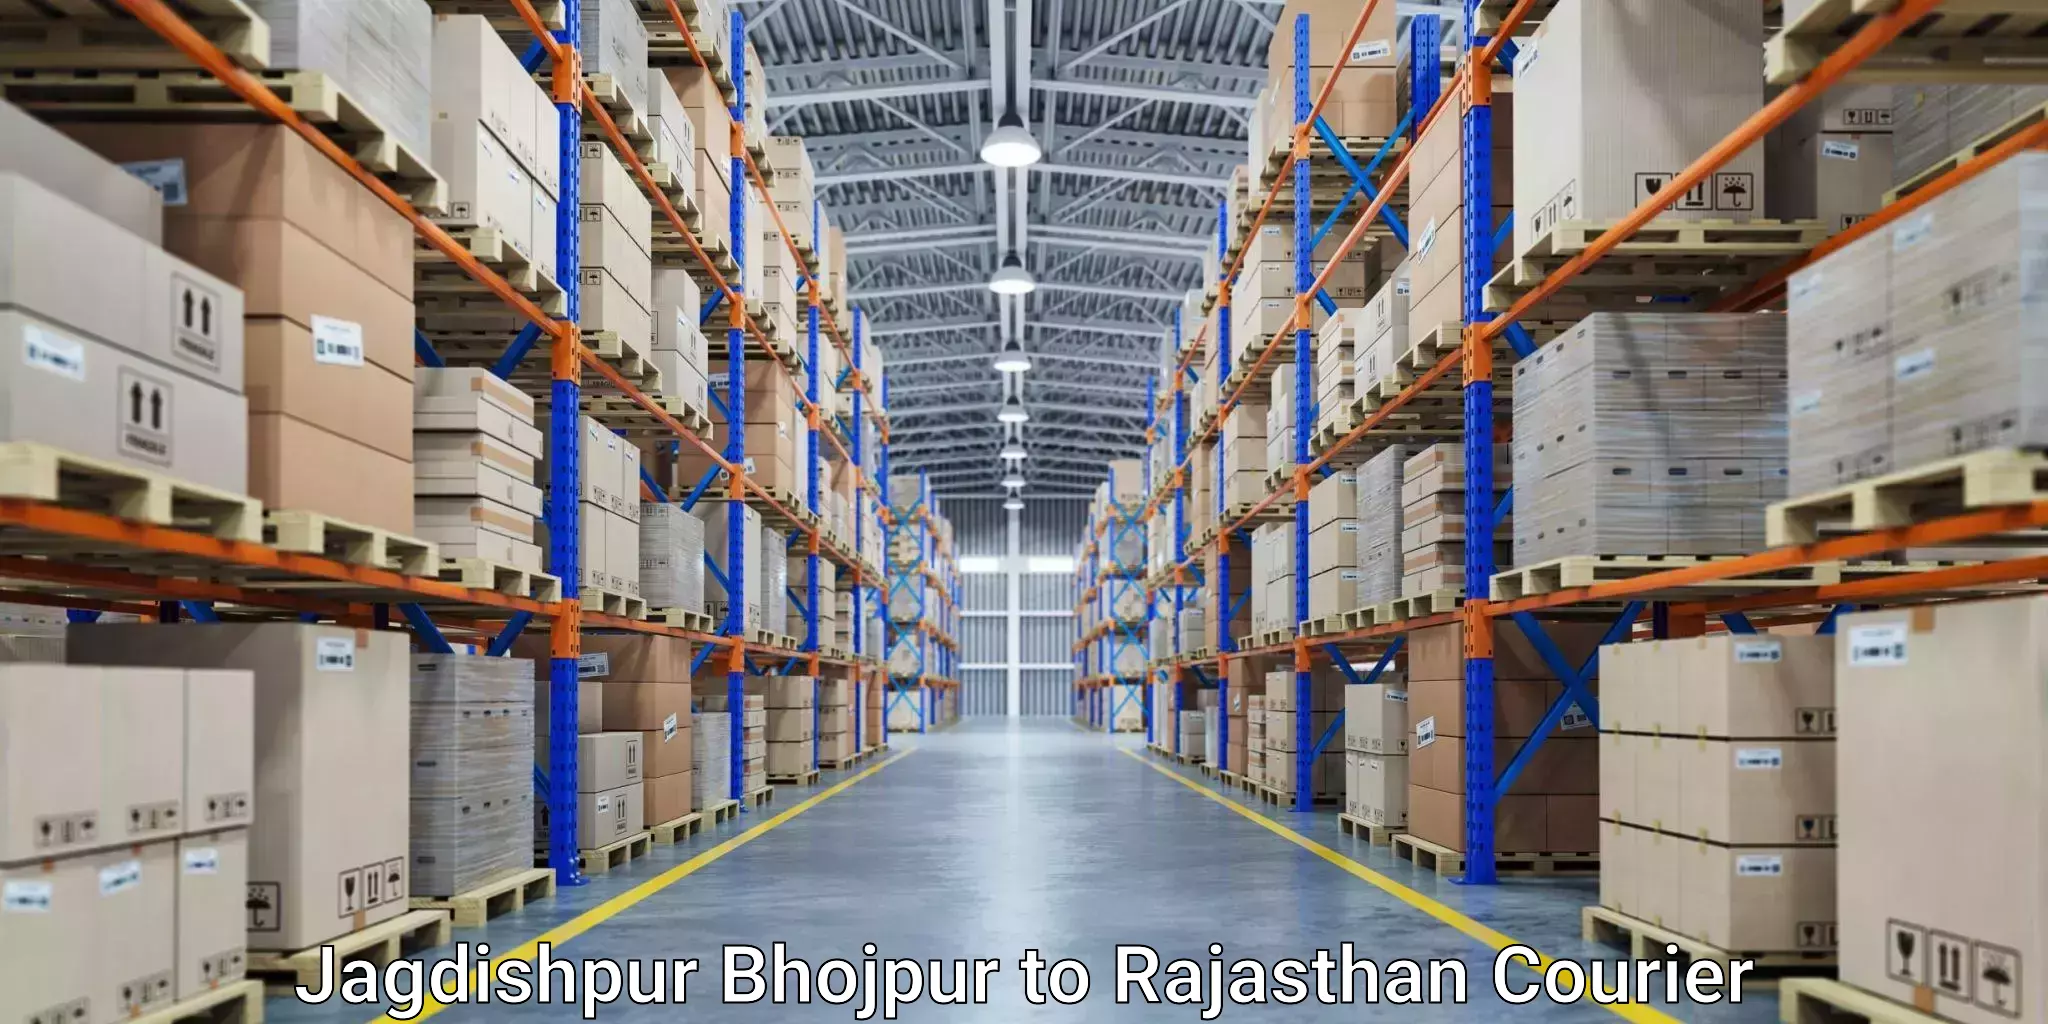 Digital courier platforms Jagdishpur Bhojpur to Udaipurwati